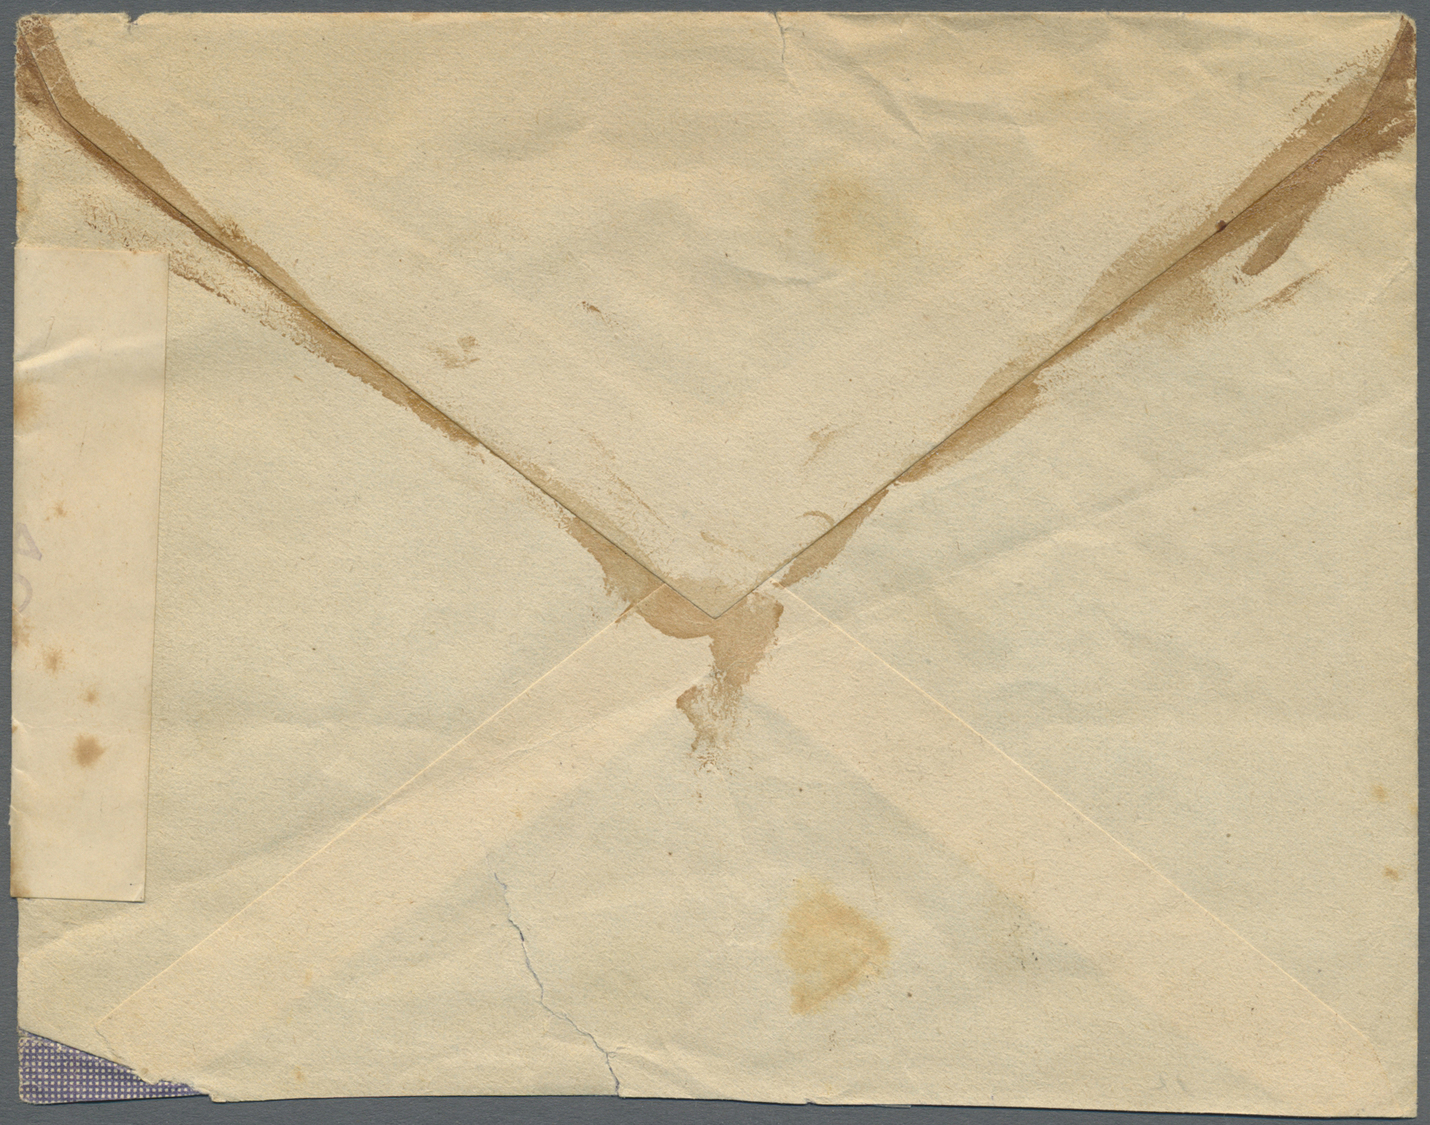 Br Französische Somaliküste: 1940. Censored Envelope To Nairobi, Kenya Bearing Cote Des Somalis Yvert 123, 20c Blue, Yve - Used Stamps